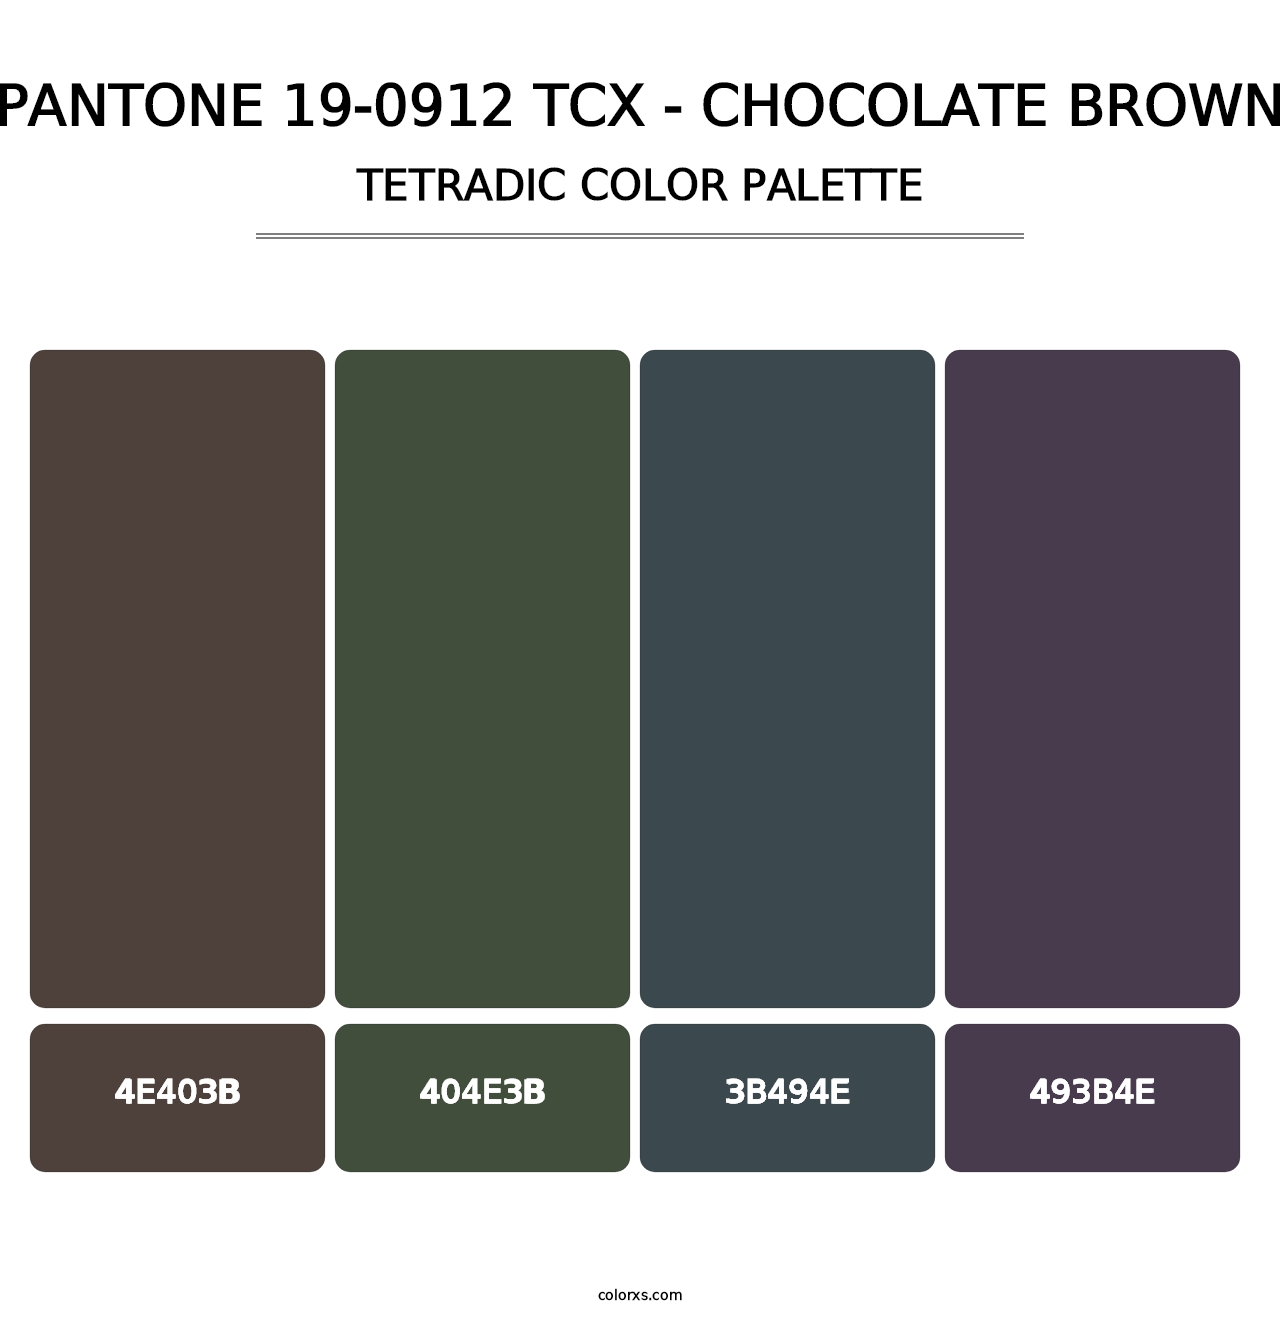 PANTONE 19-0912 TCX - Chocolate Brown - Tetradic Color Palette